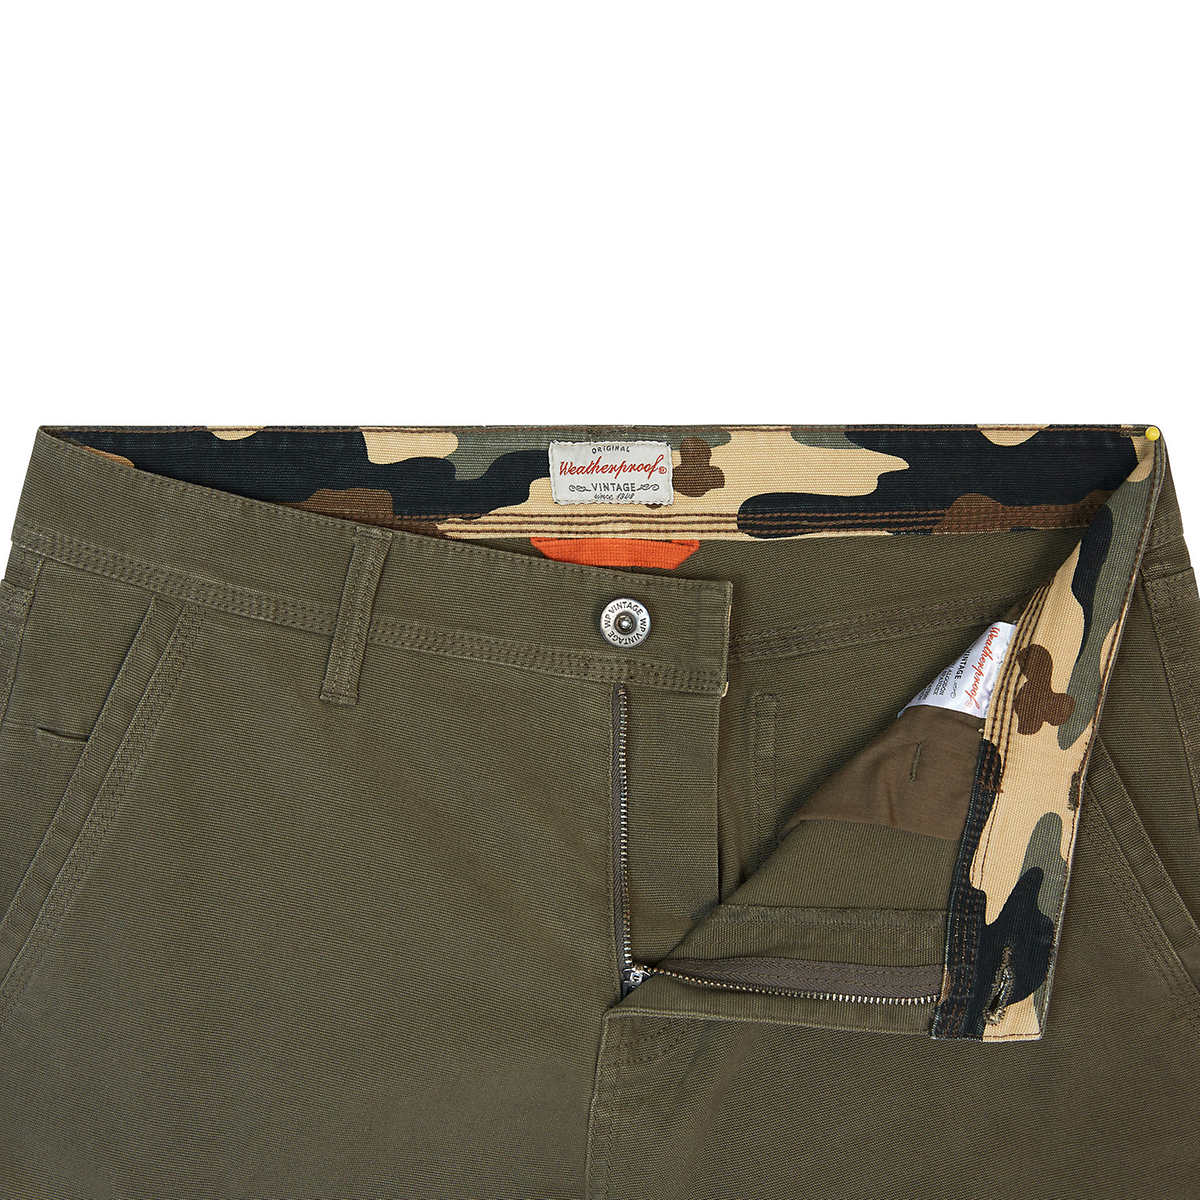 Weatherproof canvas trouser, size 40